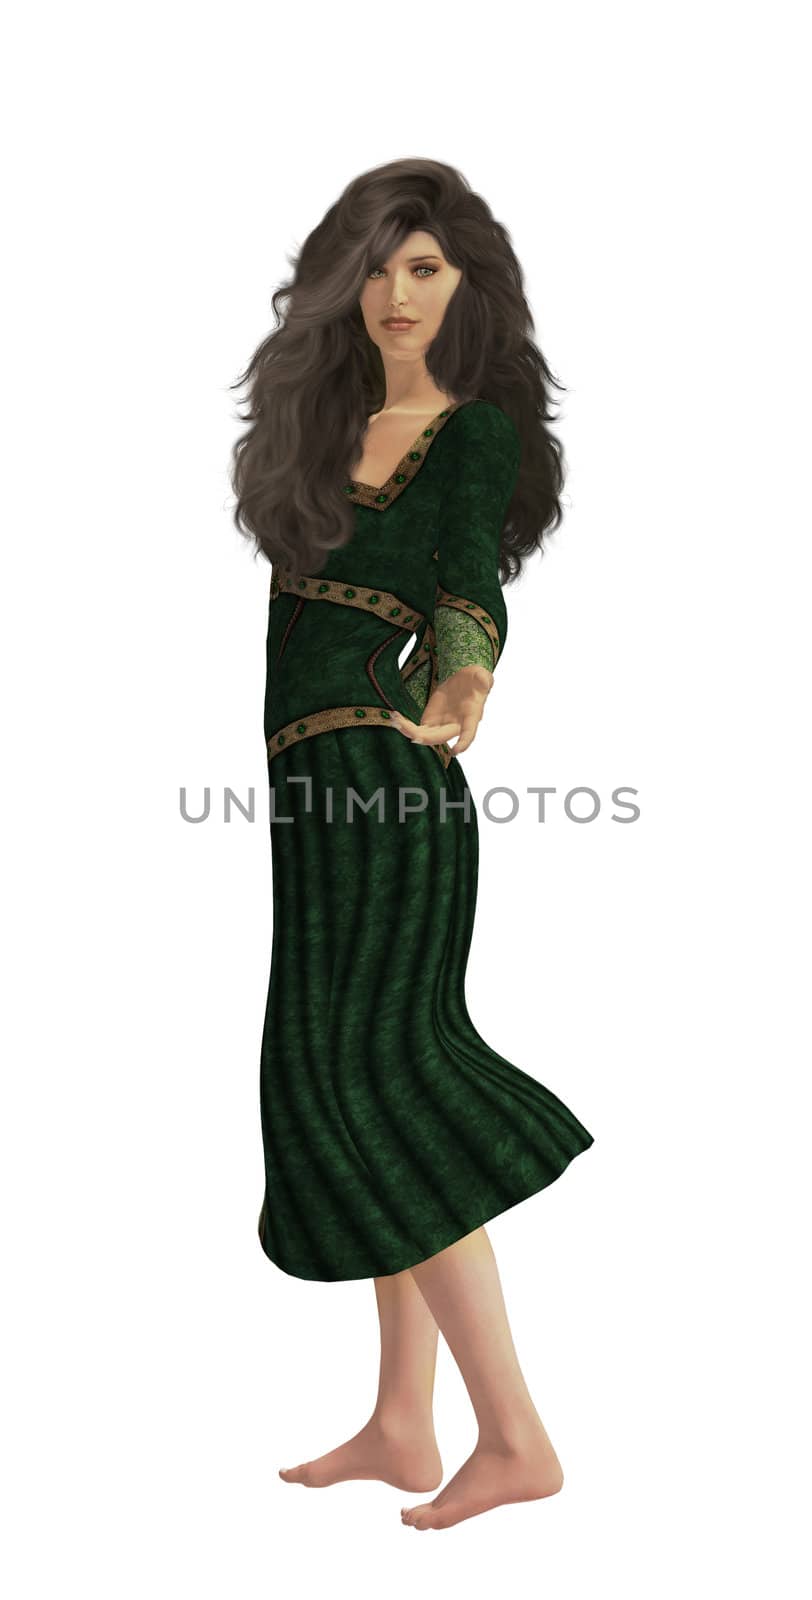 Woman in a green dress